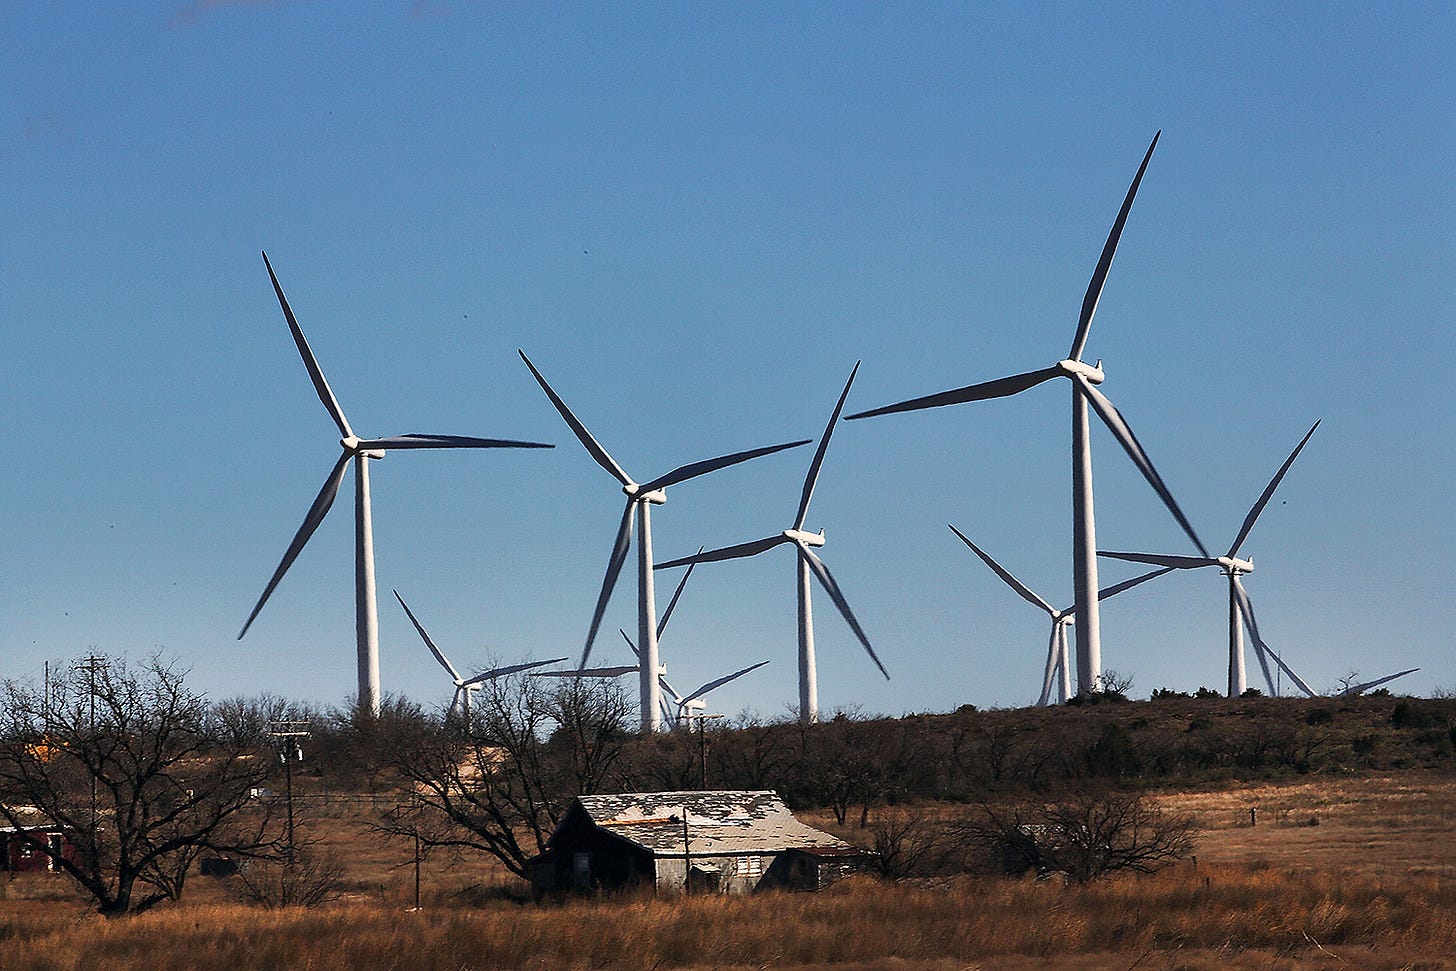 Chinese Wind Farm in Texas Raises Eyebrows